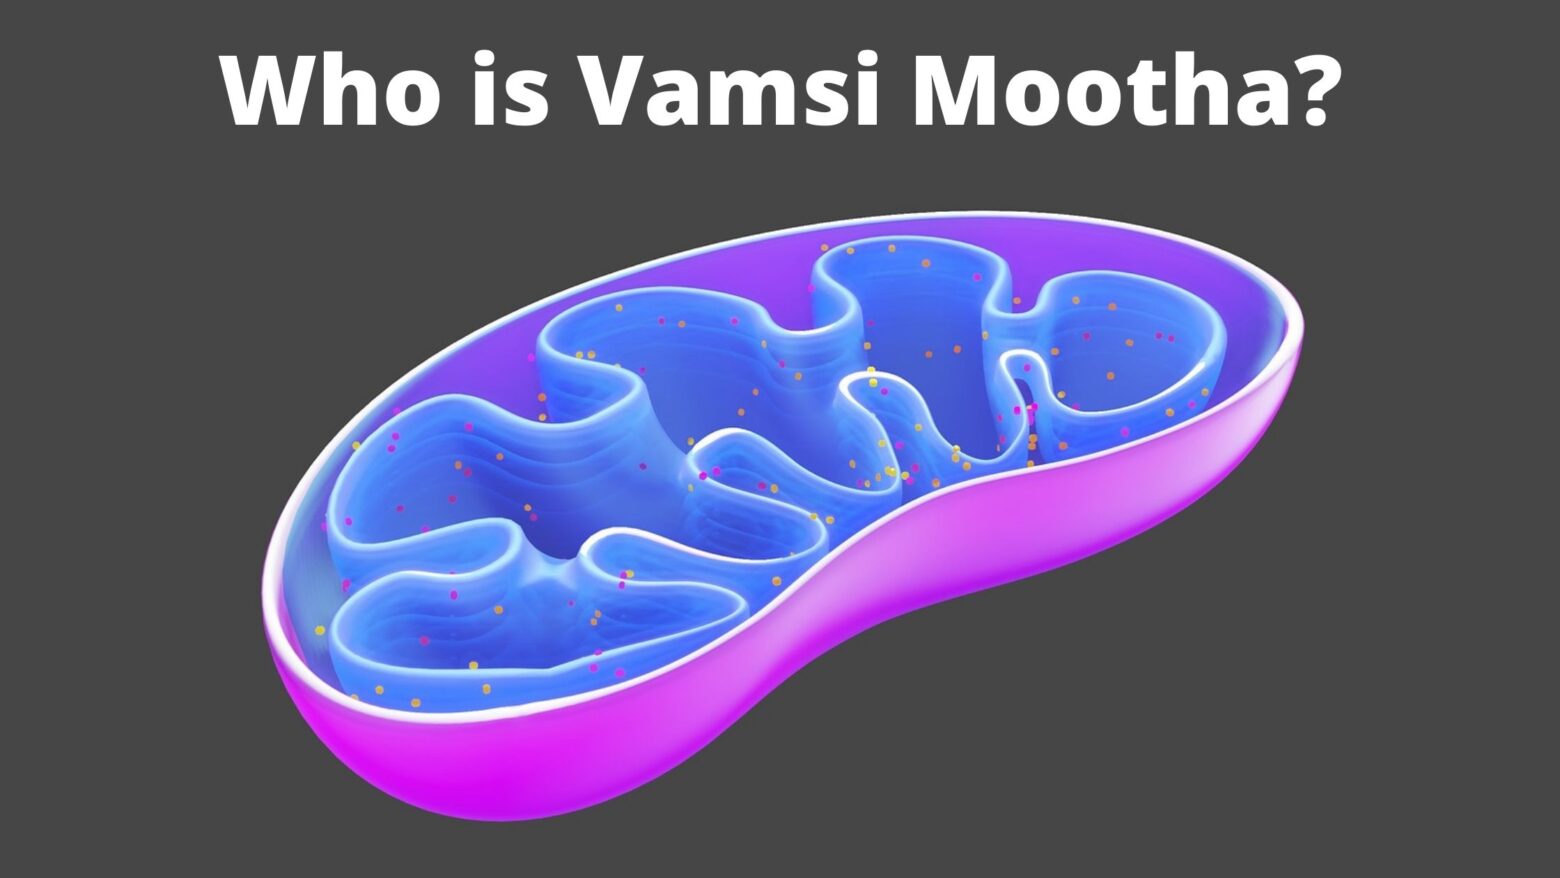 Who is Vamsi Mootha?